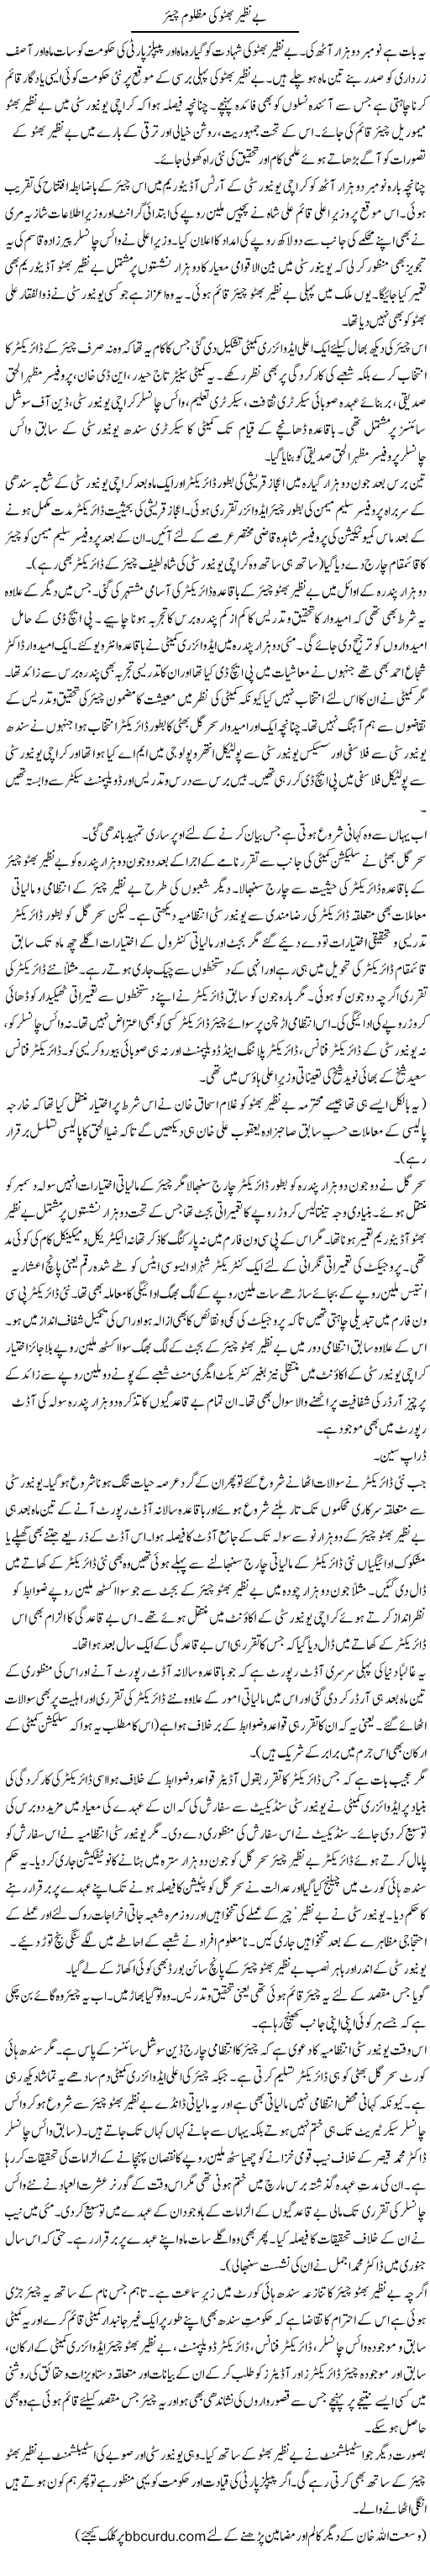 Benazir Bhutto Ki Mazloom Chair | Wusat Ullah Khan | Daily Urdu Columns